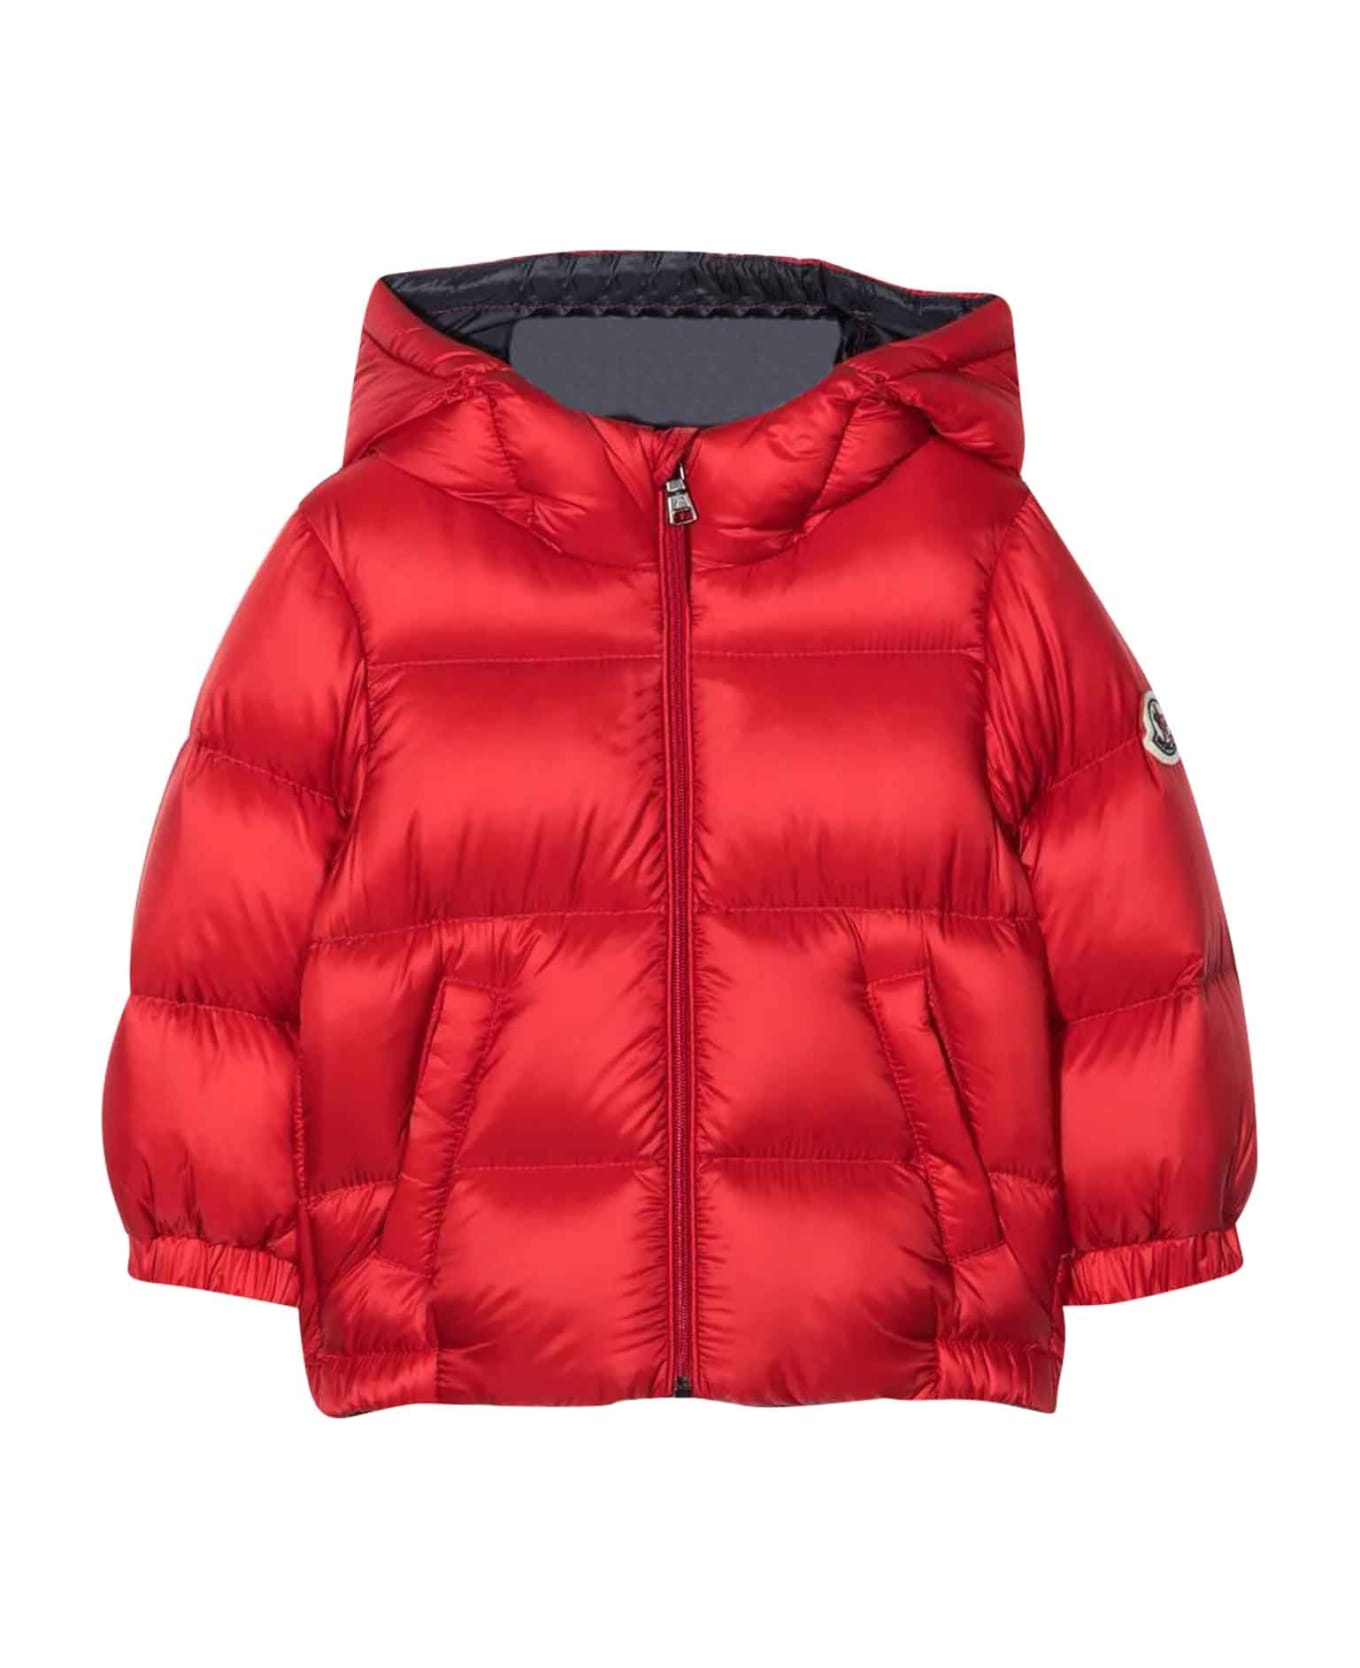 Moncler Red Jacket Baby Unisex